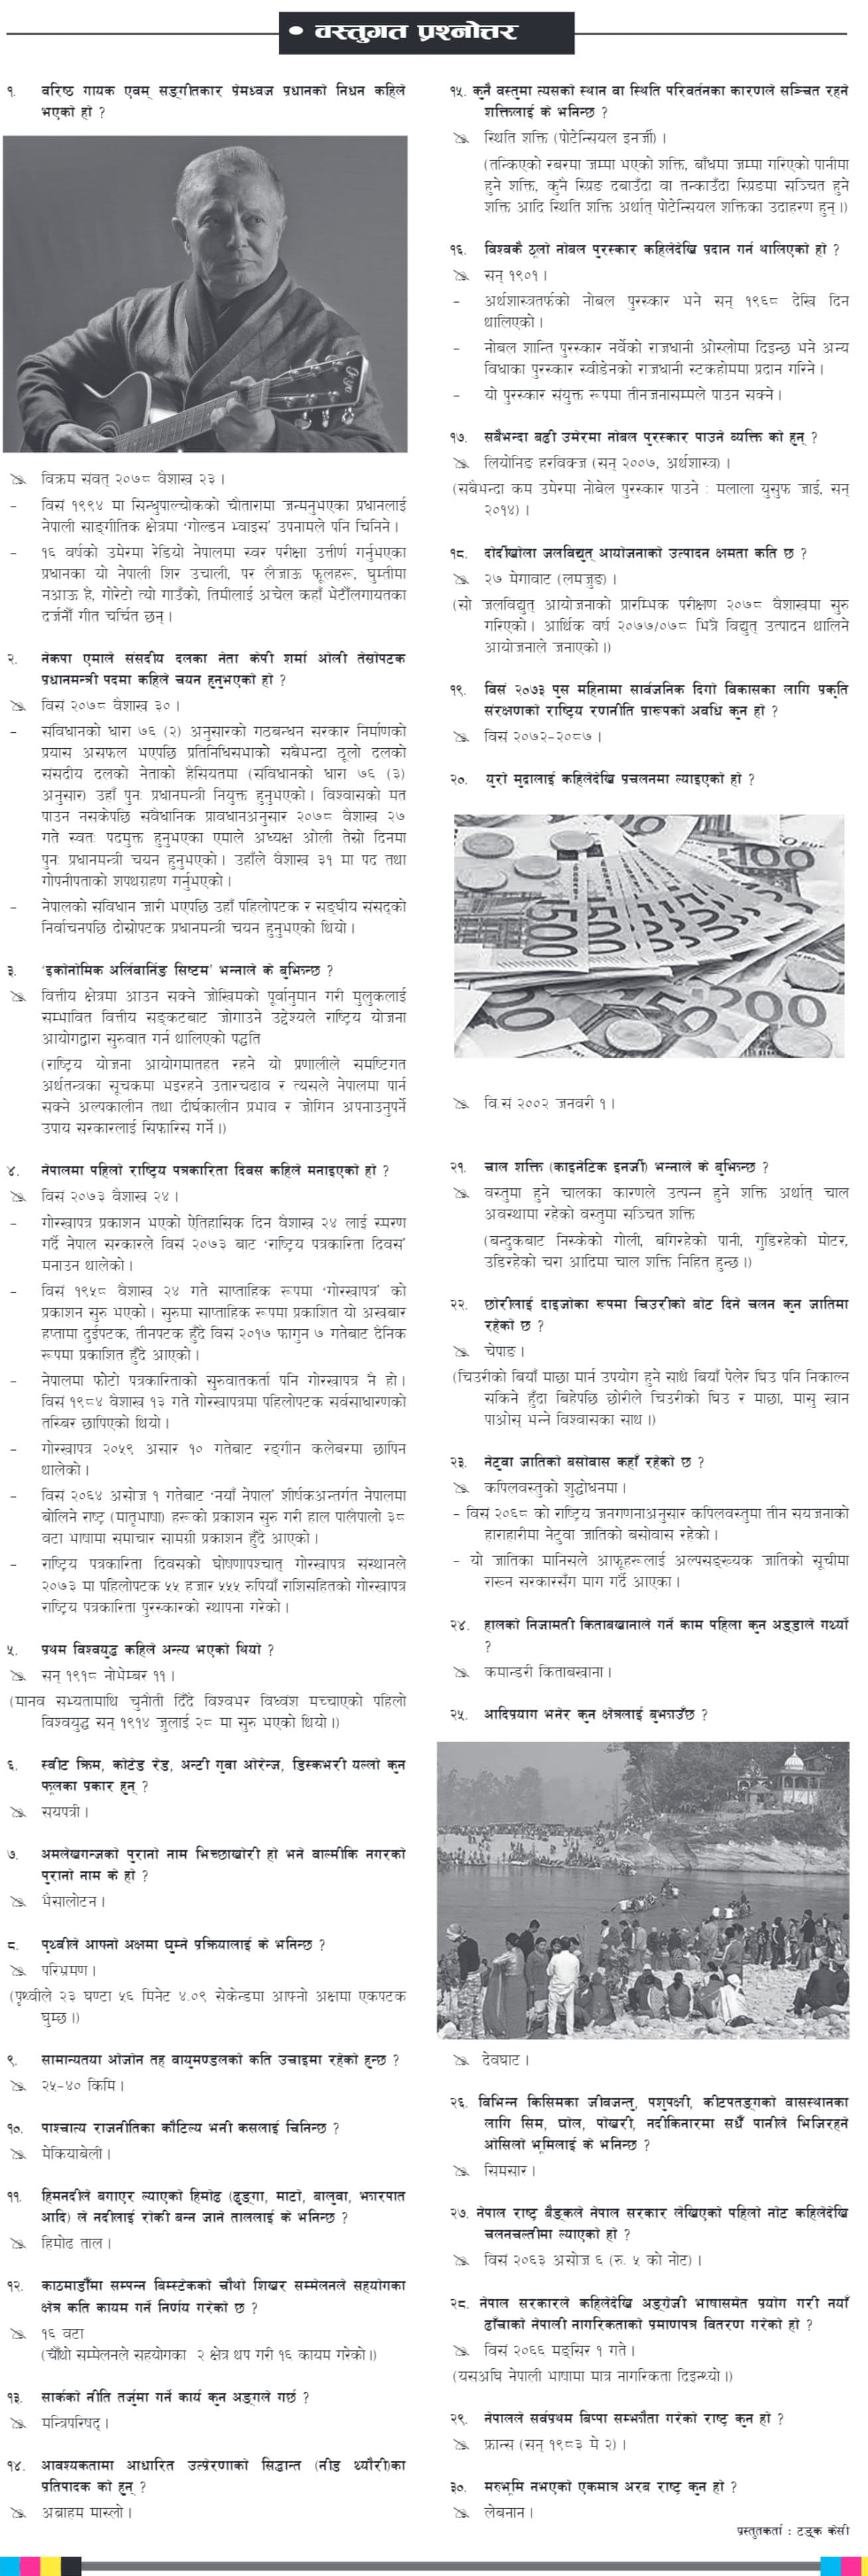 Gorkhapatra Bastugat Question 2079-02-12